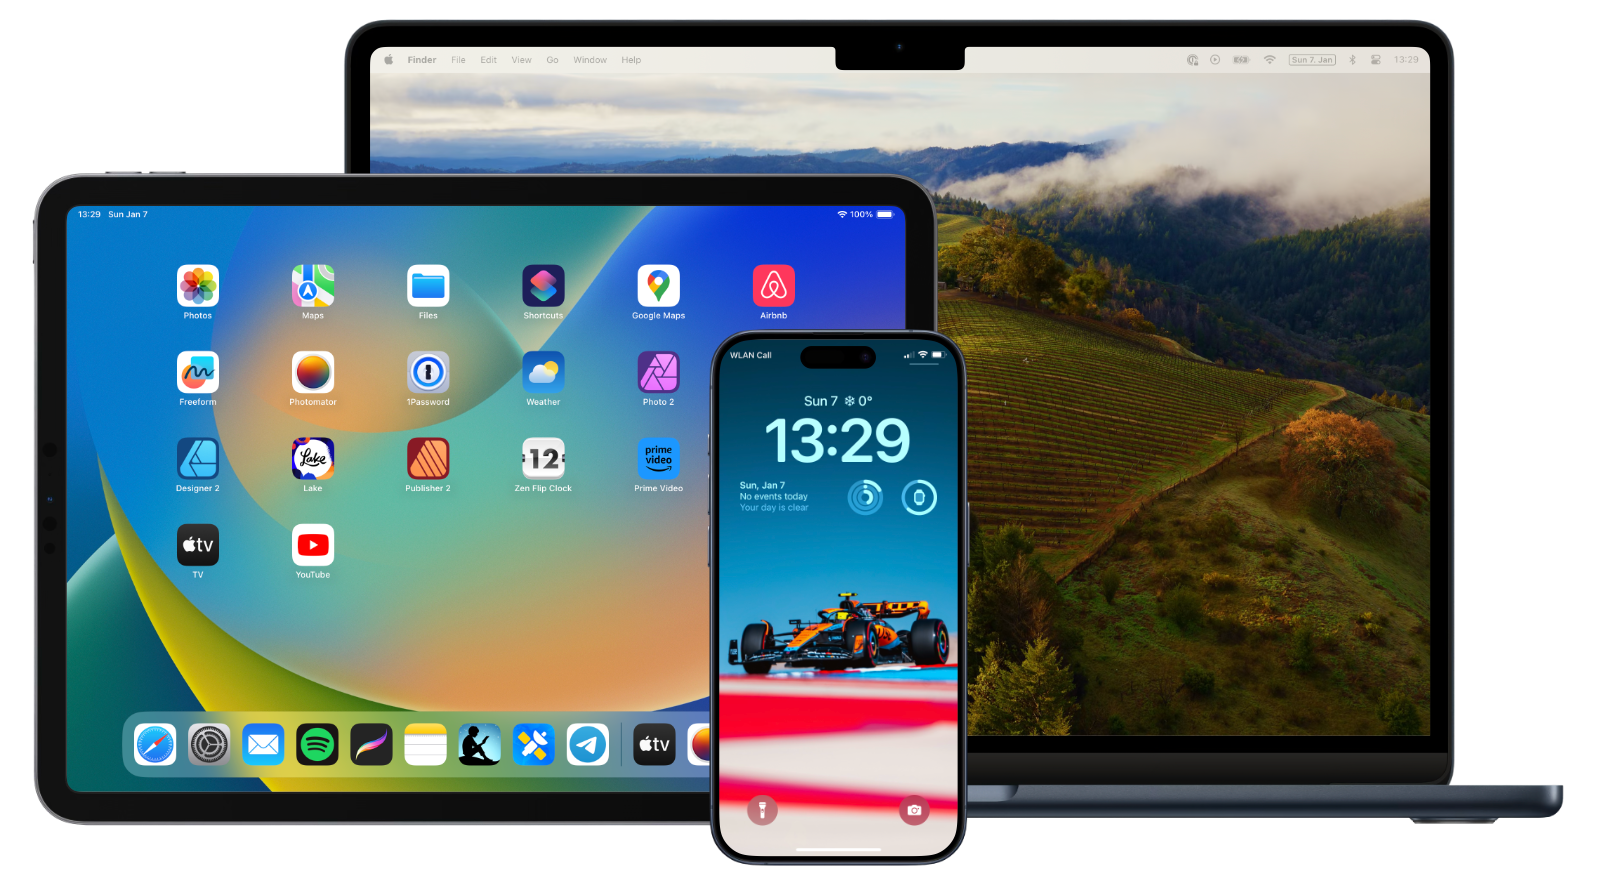 MacBook with default Sonoma Horizon wallpaper, iPad with default iOS 17 wallpaper, and iPhone with McLaren photo by Evgeniy Safronov